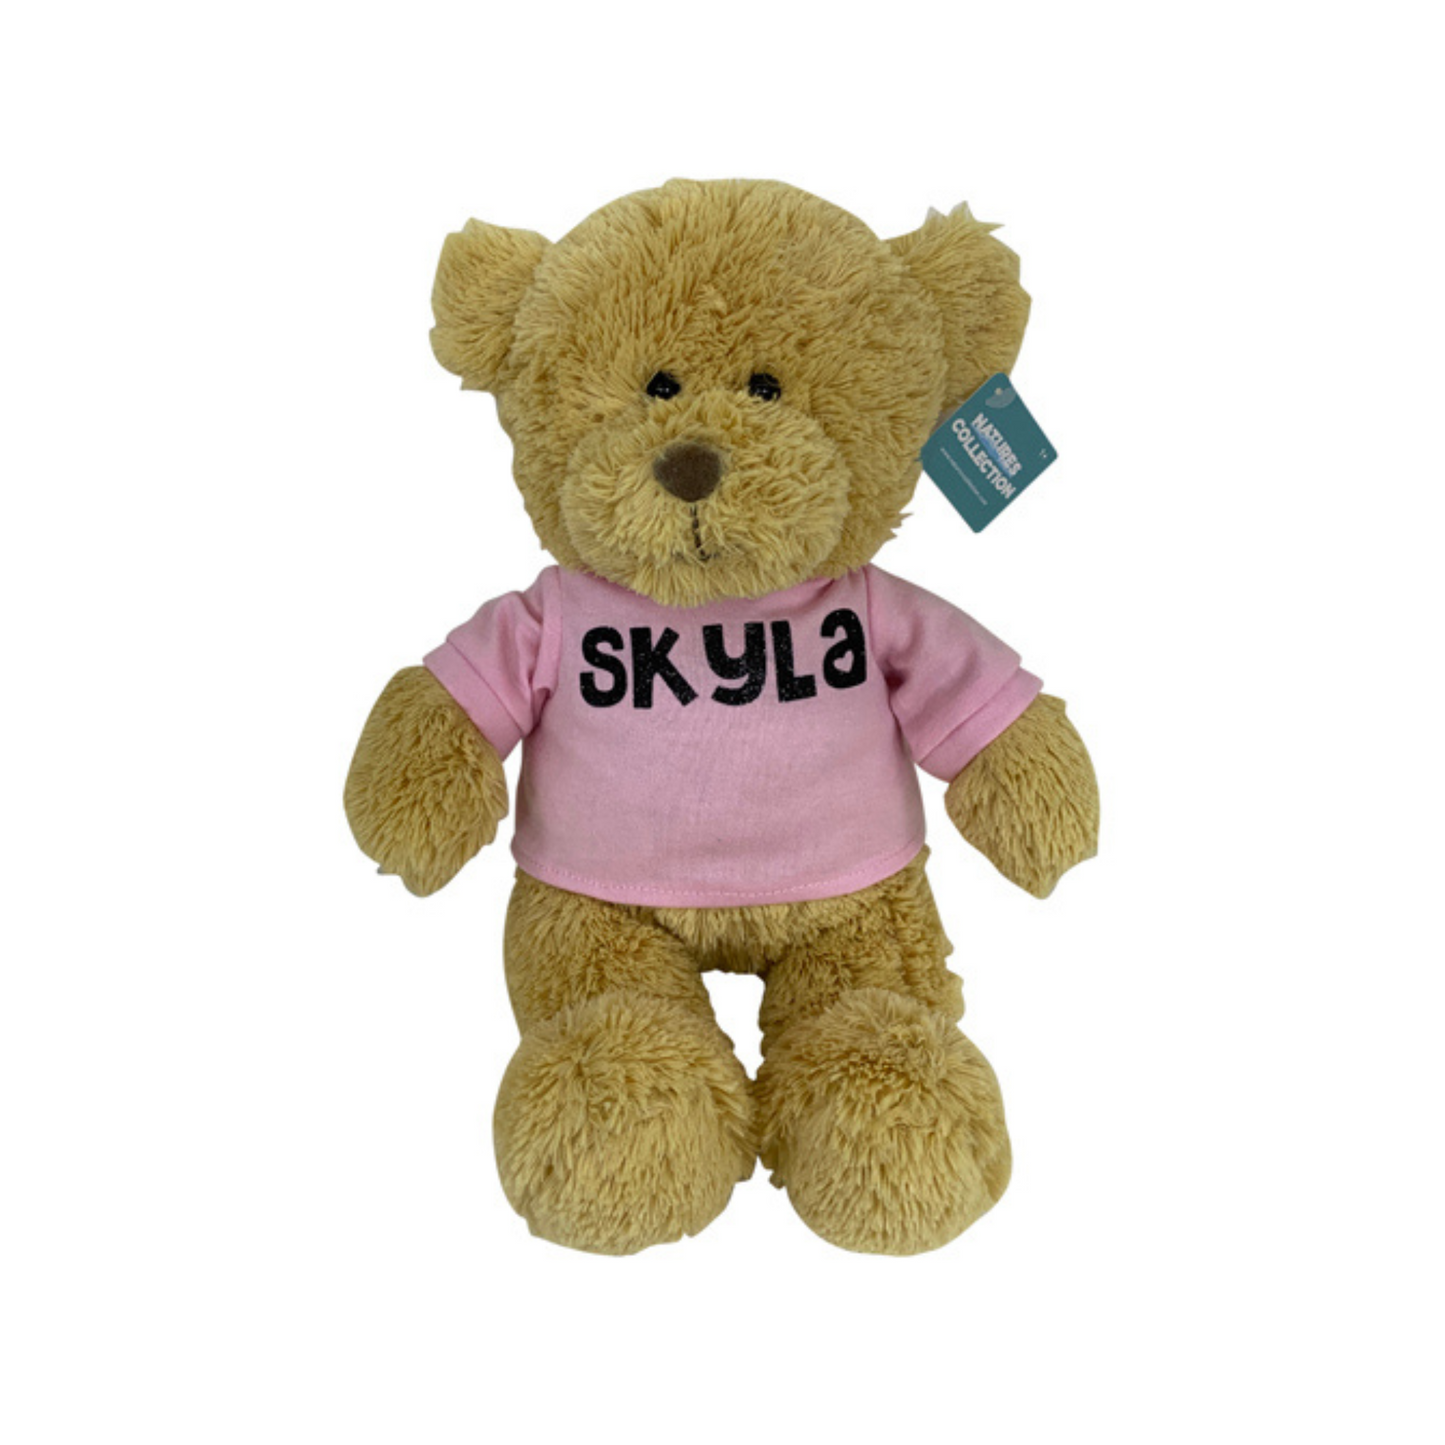 Personalized Teddy Bear Plush (12.5")